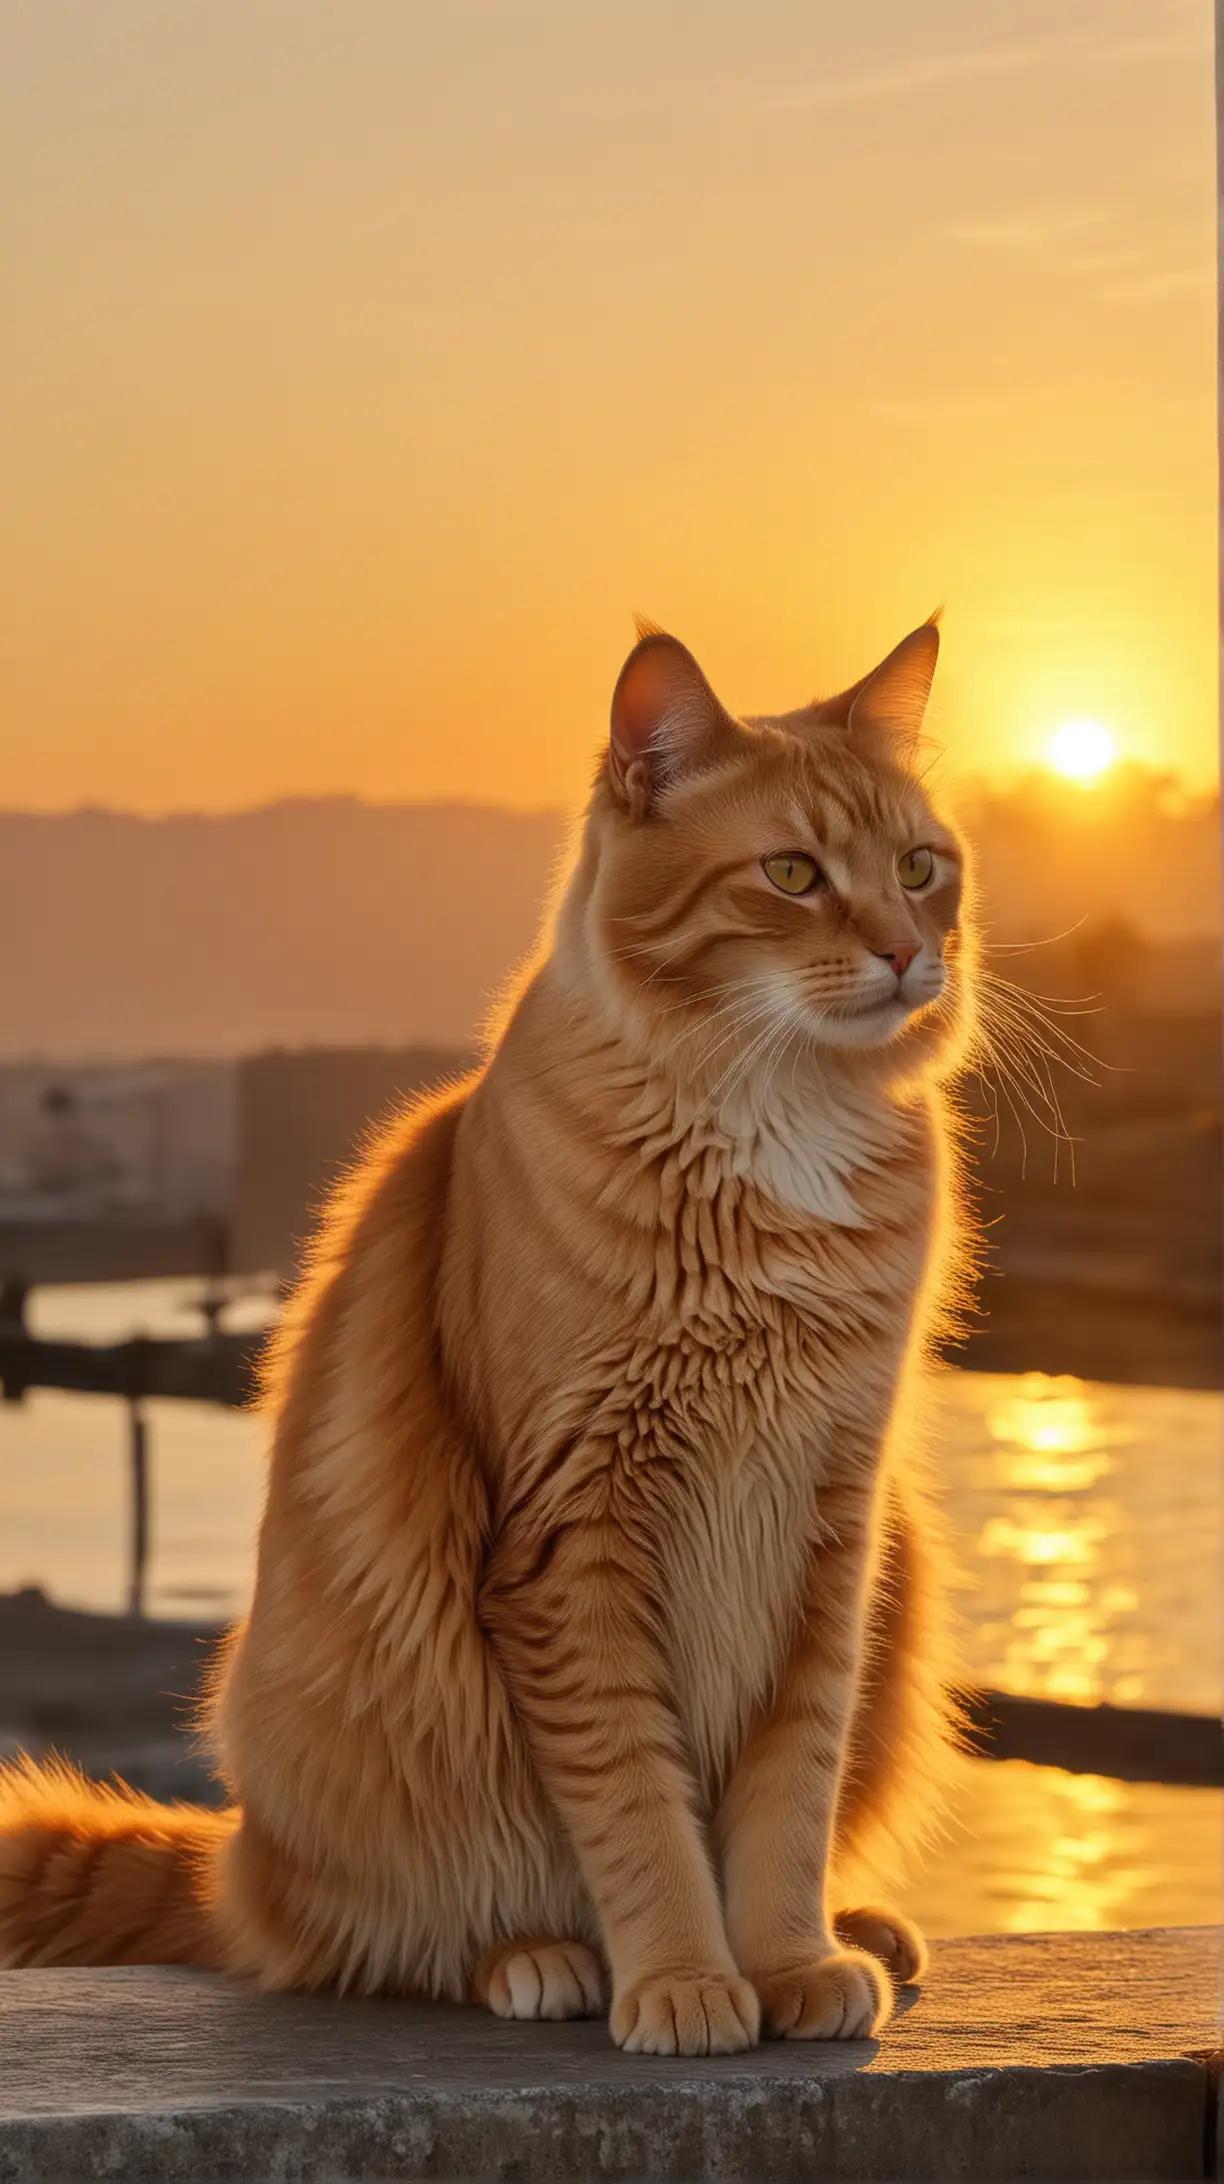 Morning Serenity Feline Bathed in Golden Dawn Light